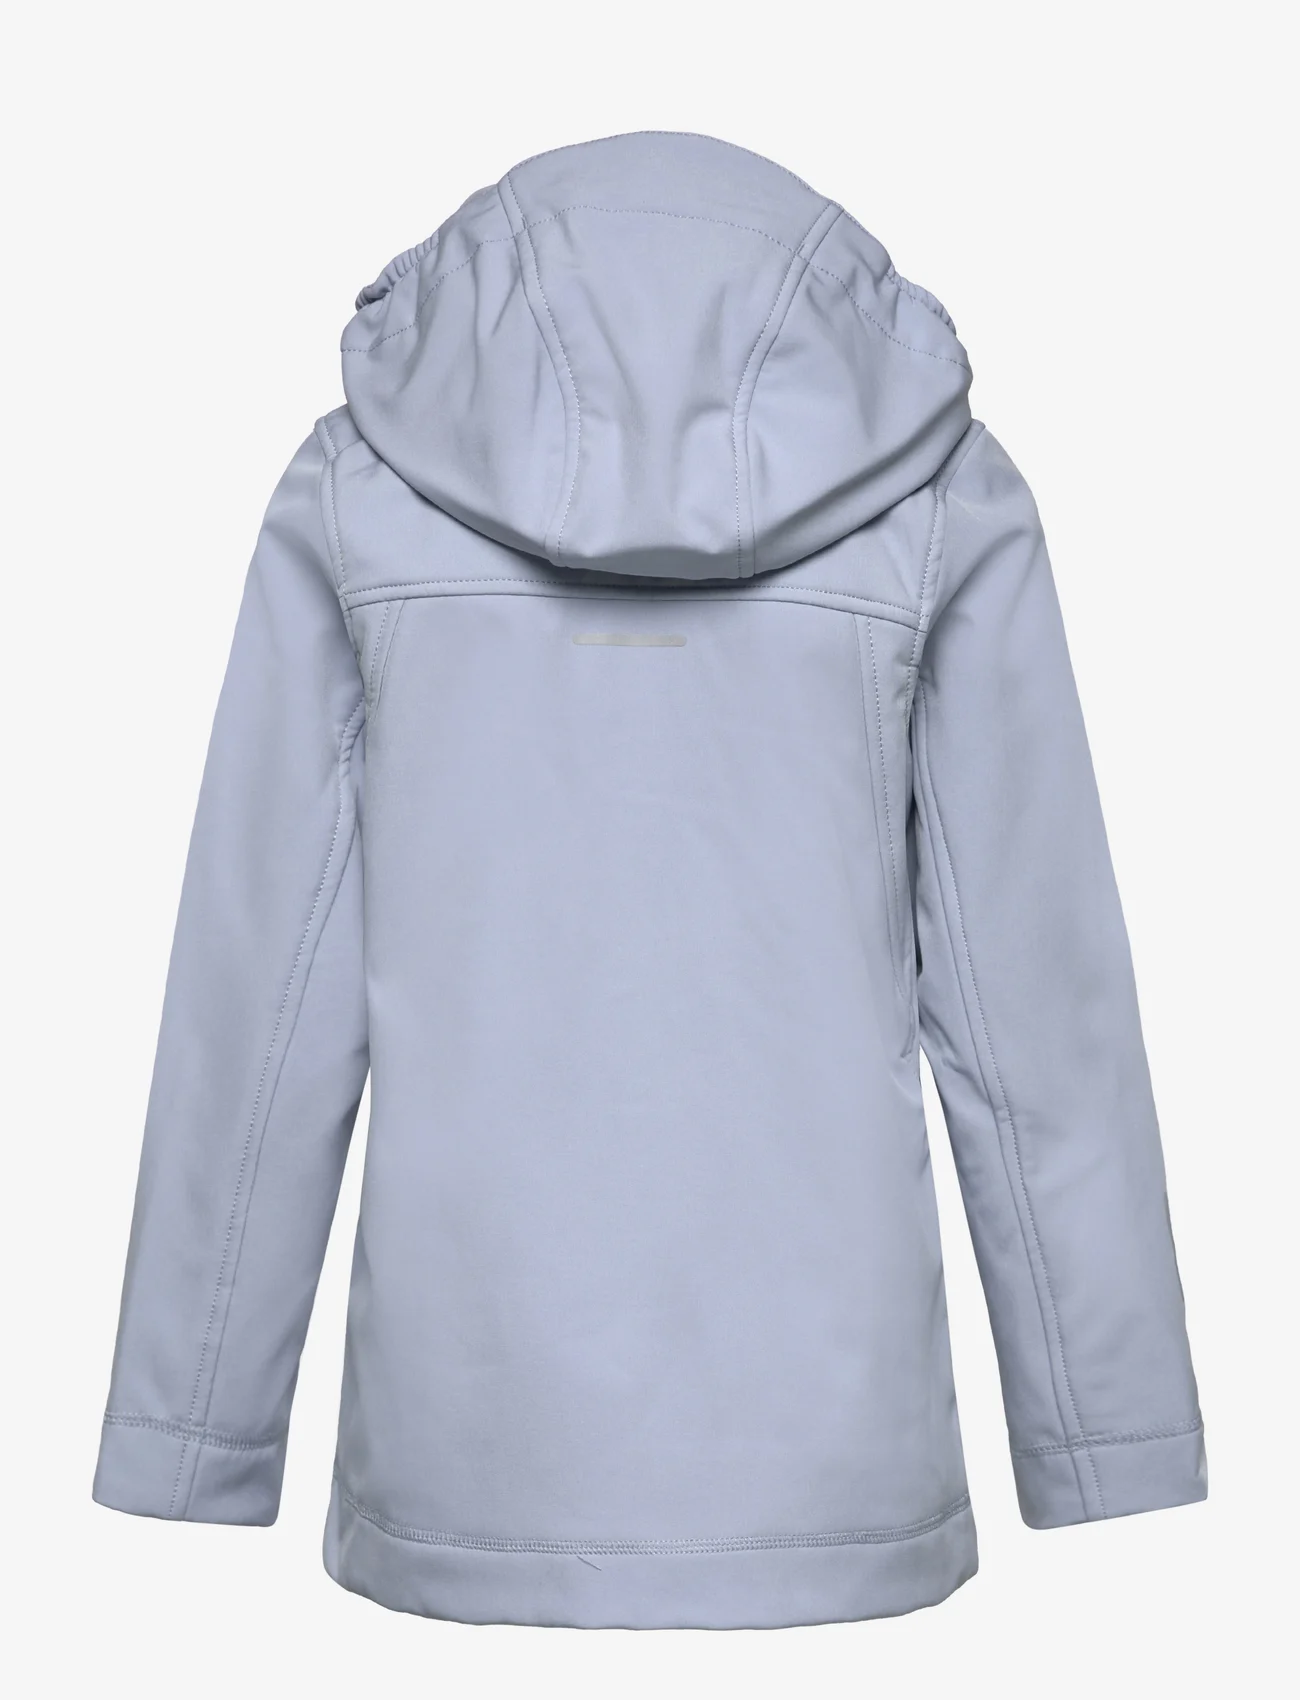 Reima - Softshell jacket, Espoo - kinderen - foggy blue - 1